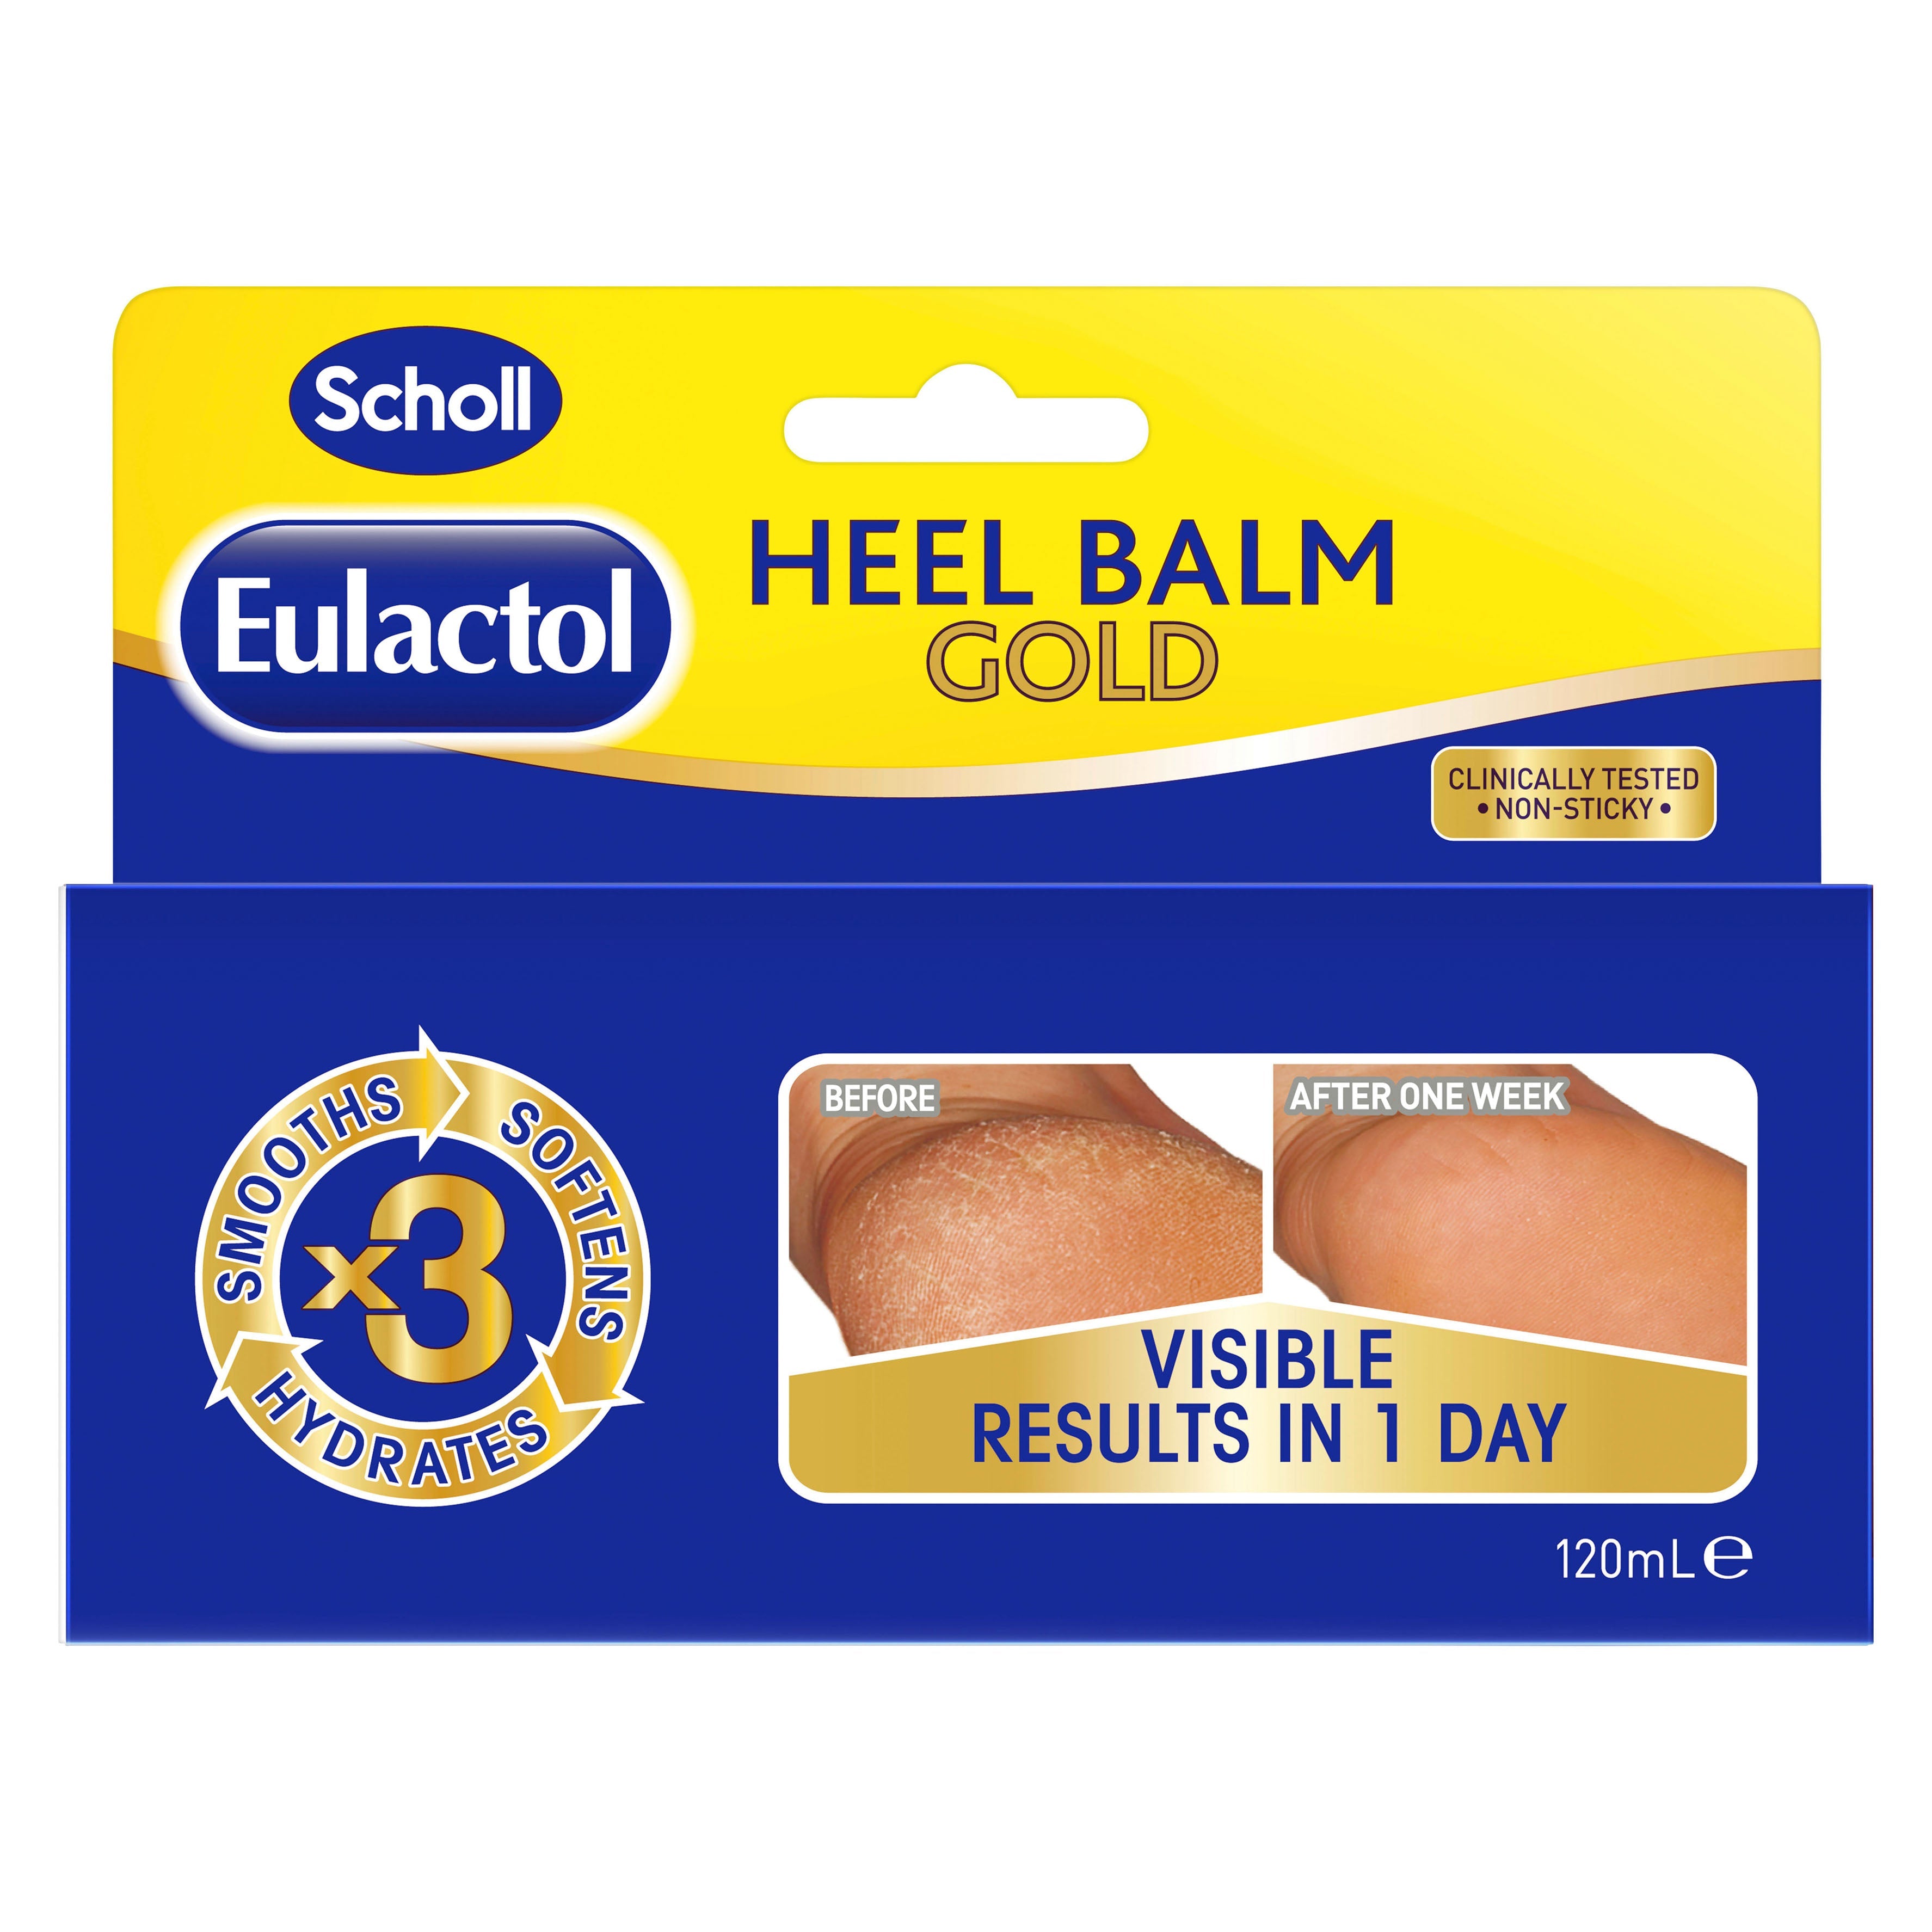 Scholl Cracked Heel Repair Cream Active Repair K+ 60 ml | eBay